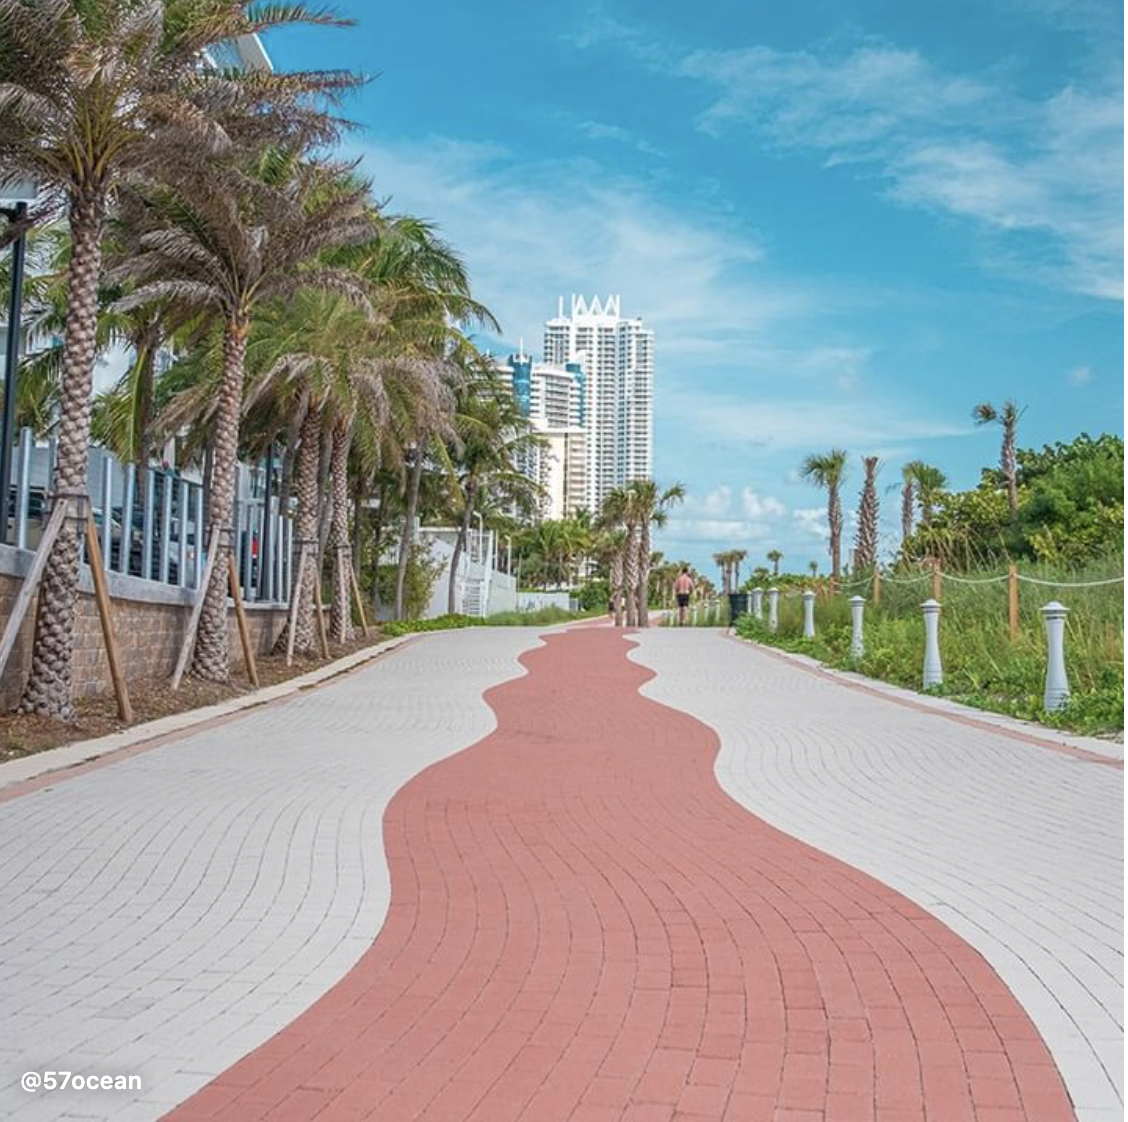  Miami Beach Boardwalk